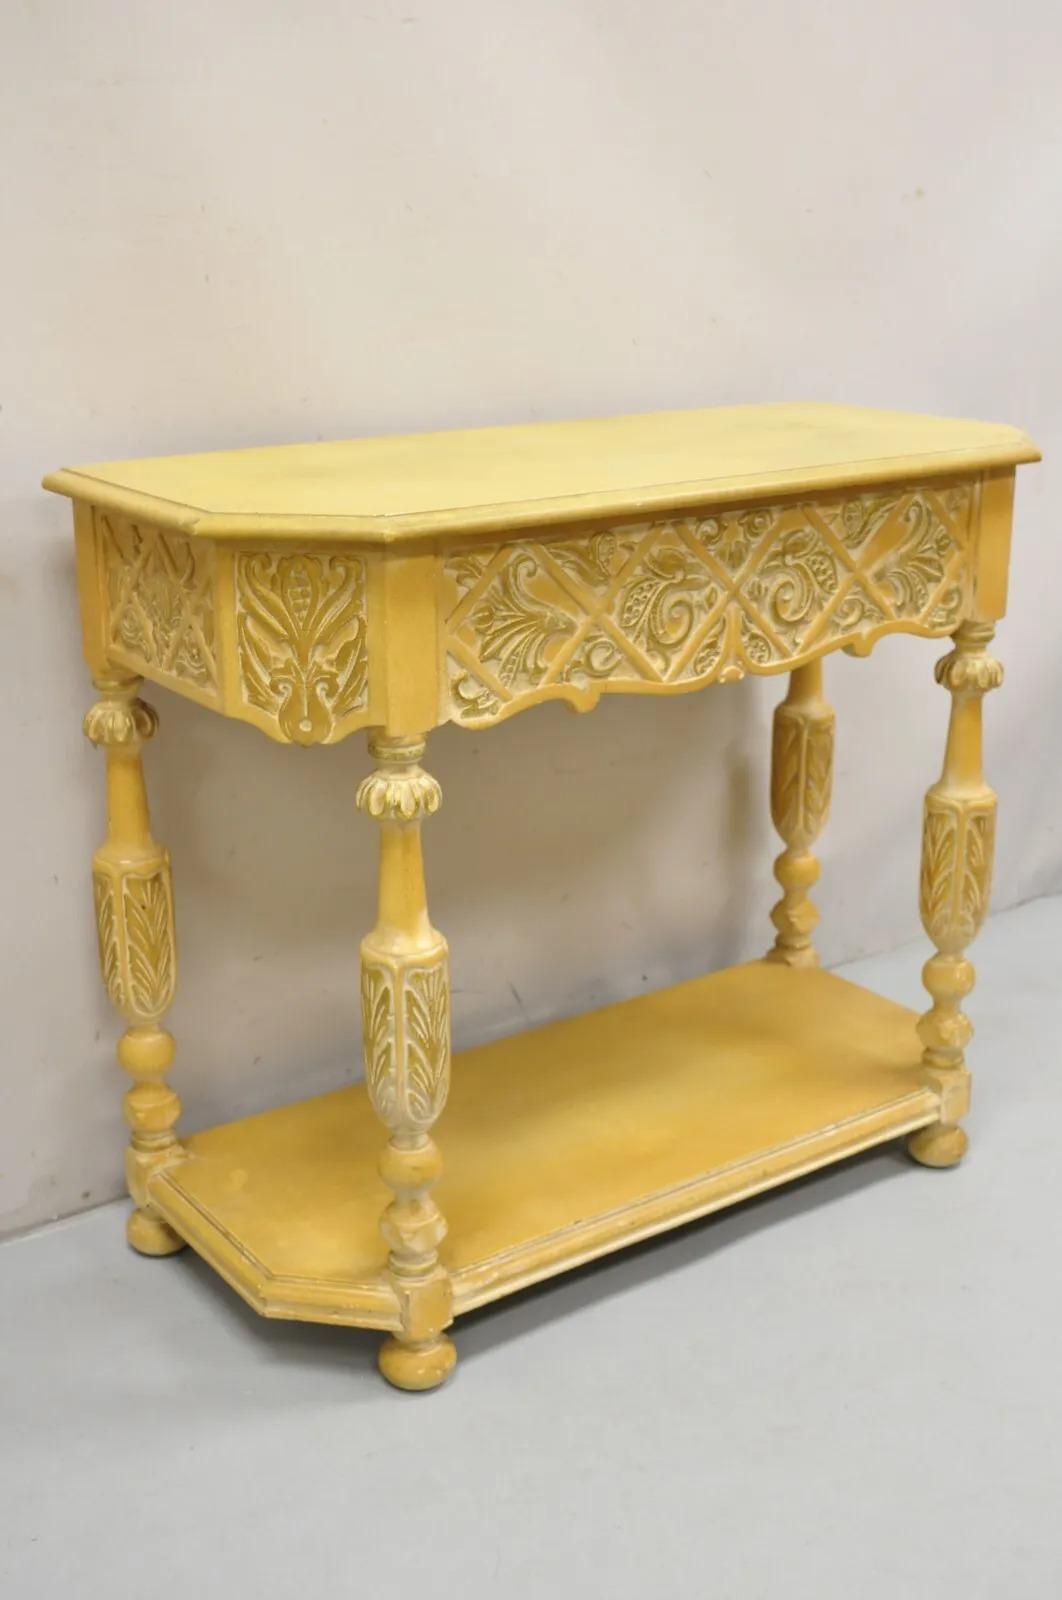 Gothic Renaissance Revival Painted Hall Altar Console Table Chair Set - 4 Pc Set For Sale 11